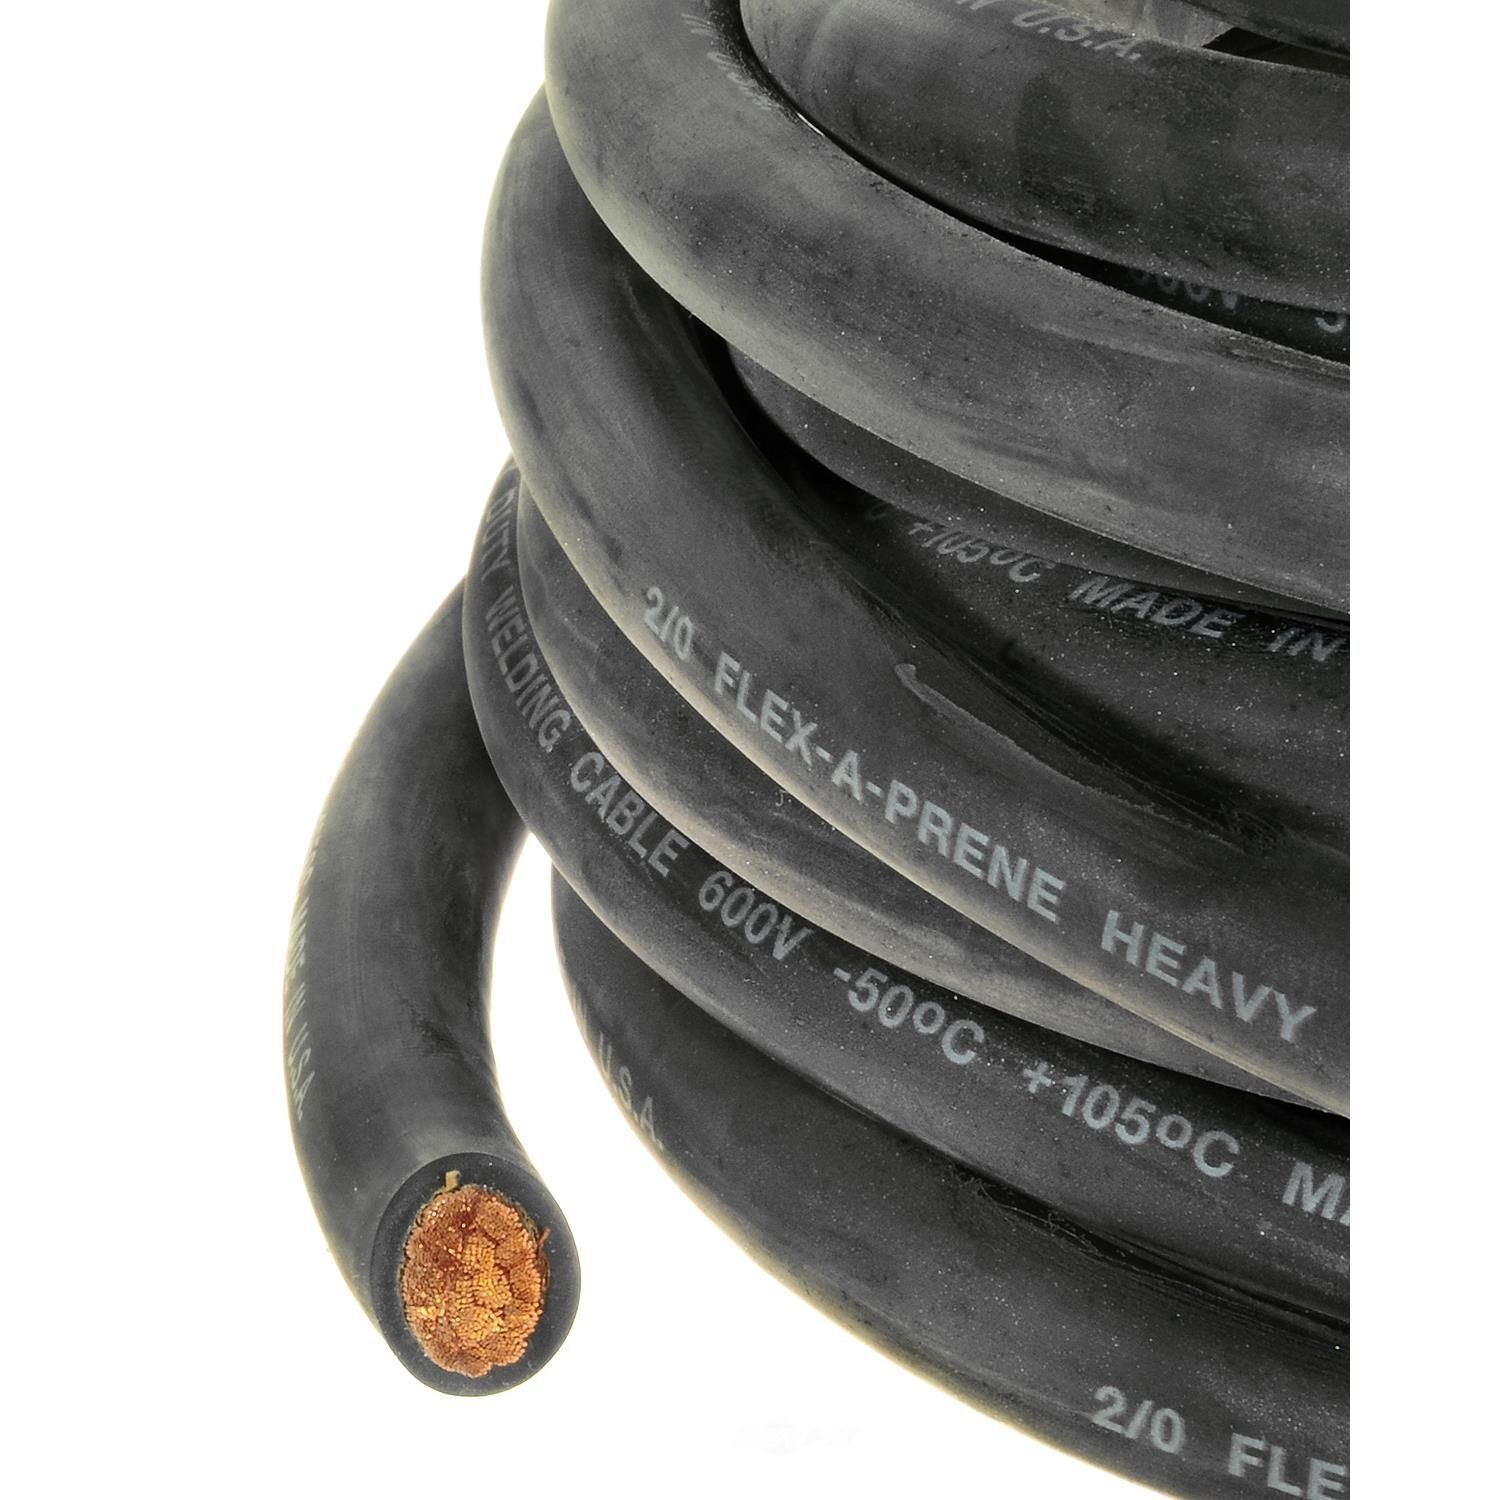 YSP CB55BK-25 Wells Welding Cable (Black, 25', 2/0G)